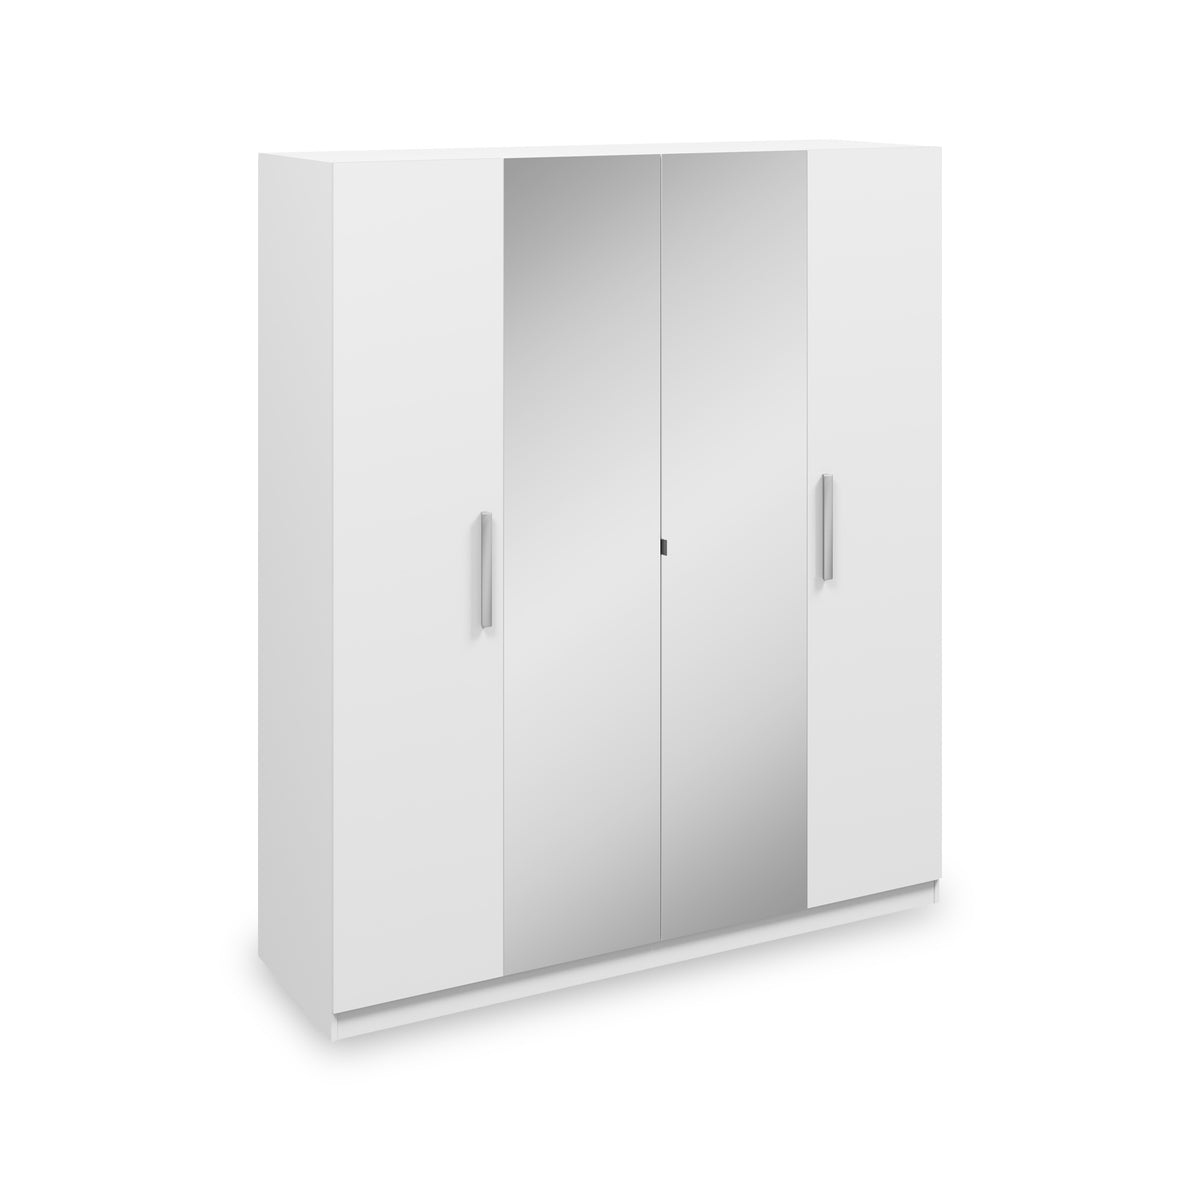 Meribel White 4 Door Mirrored Wardrobe from Roseland furniture